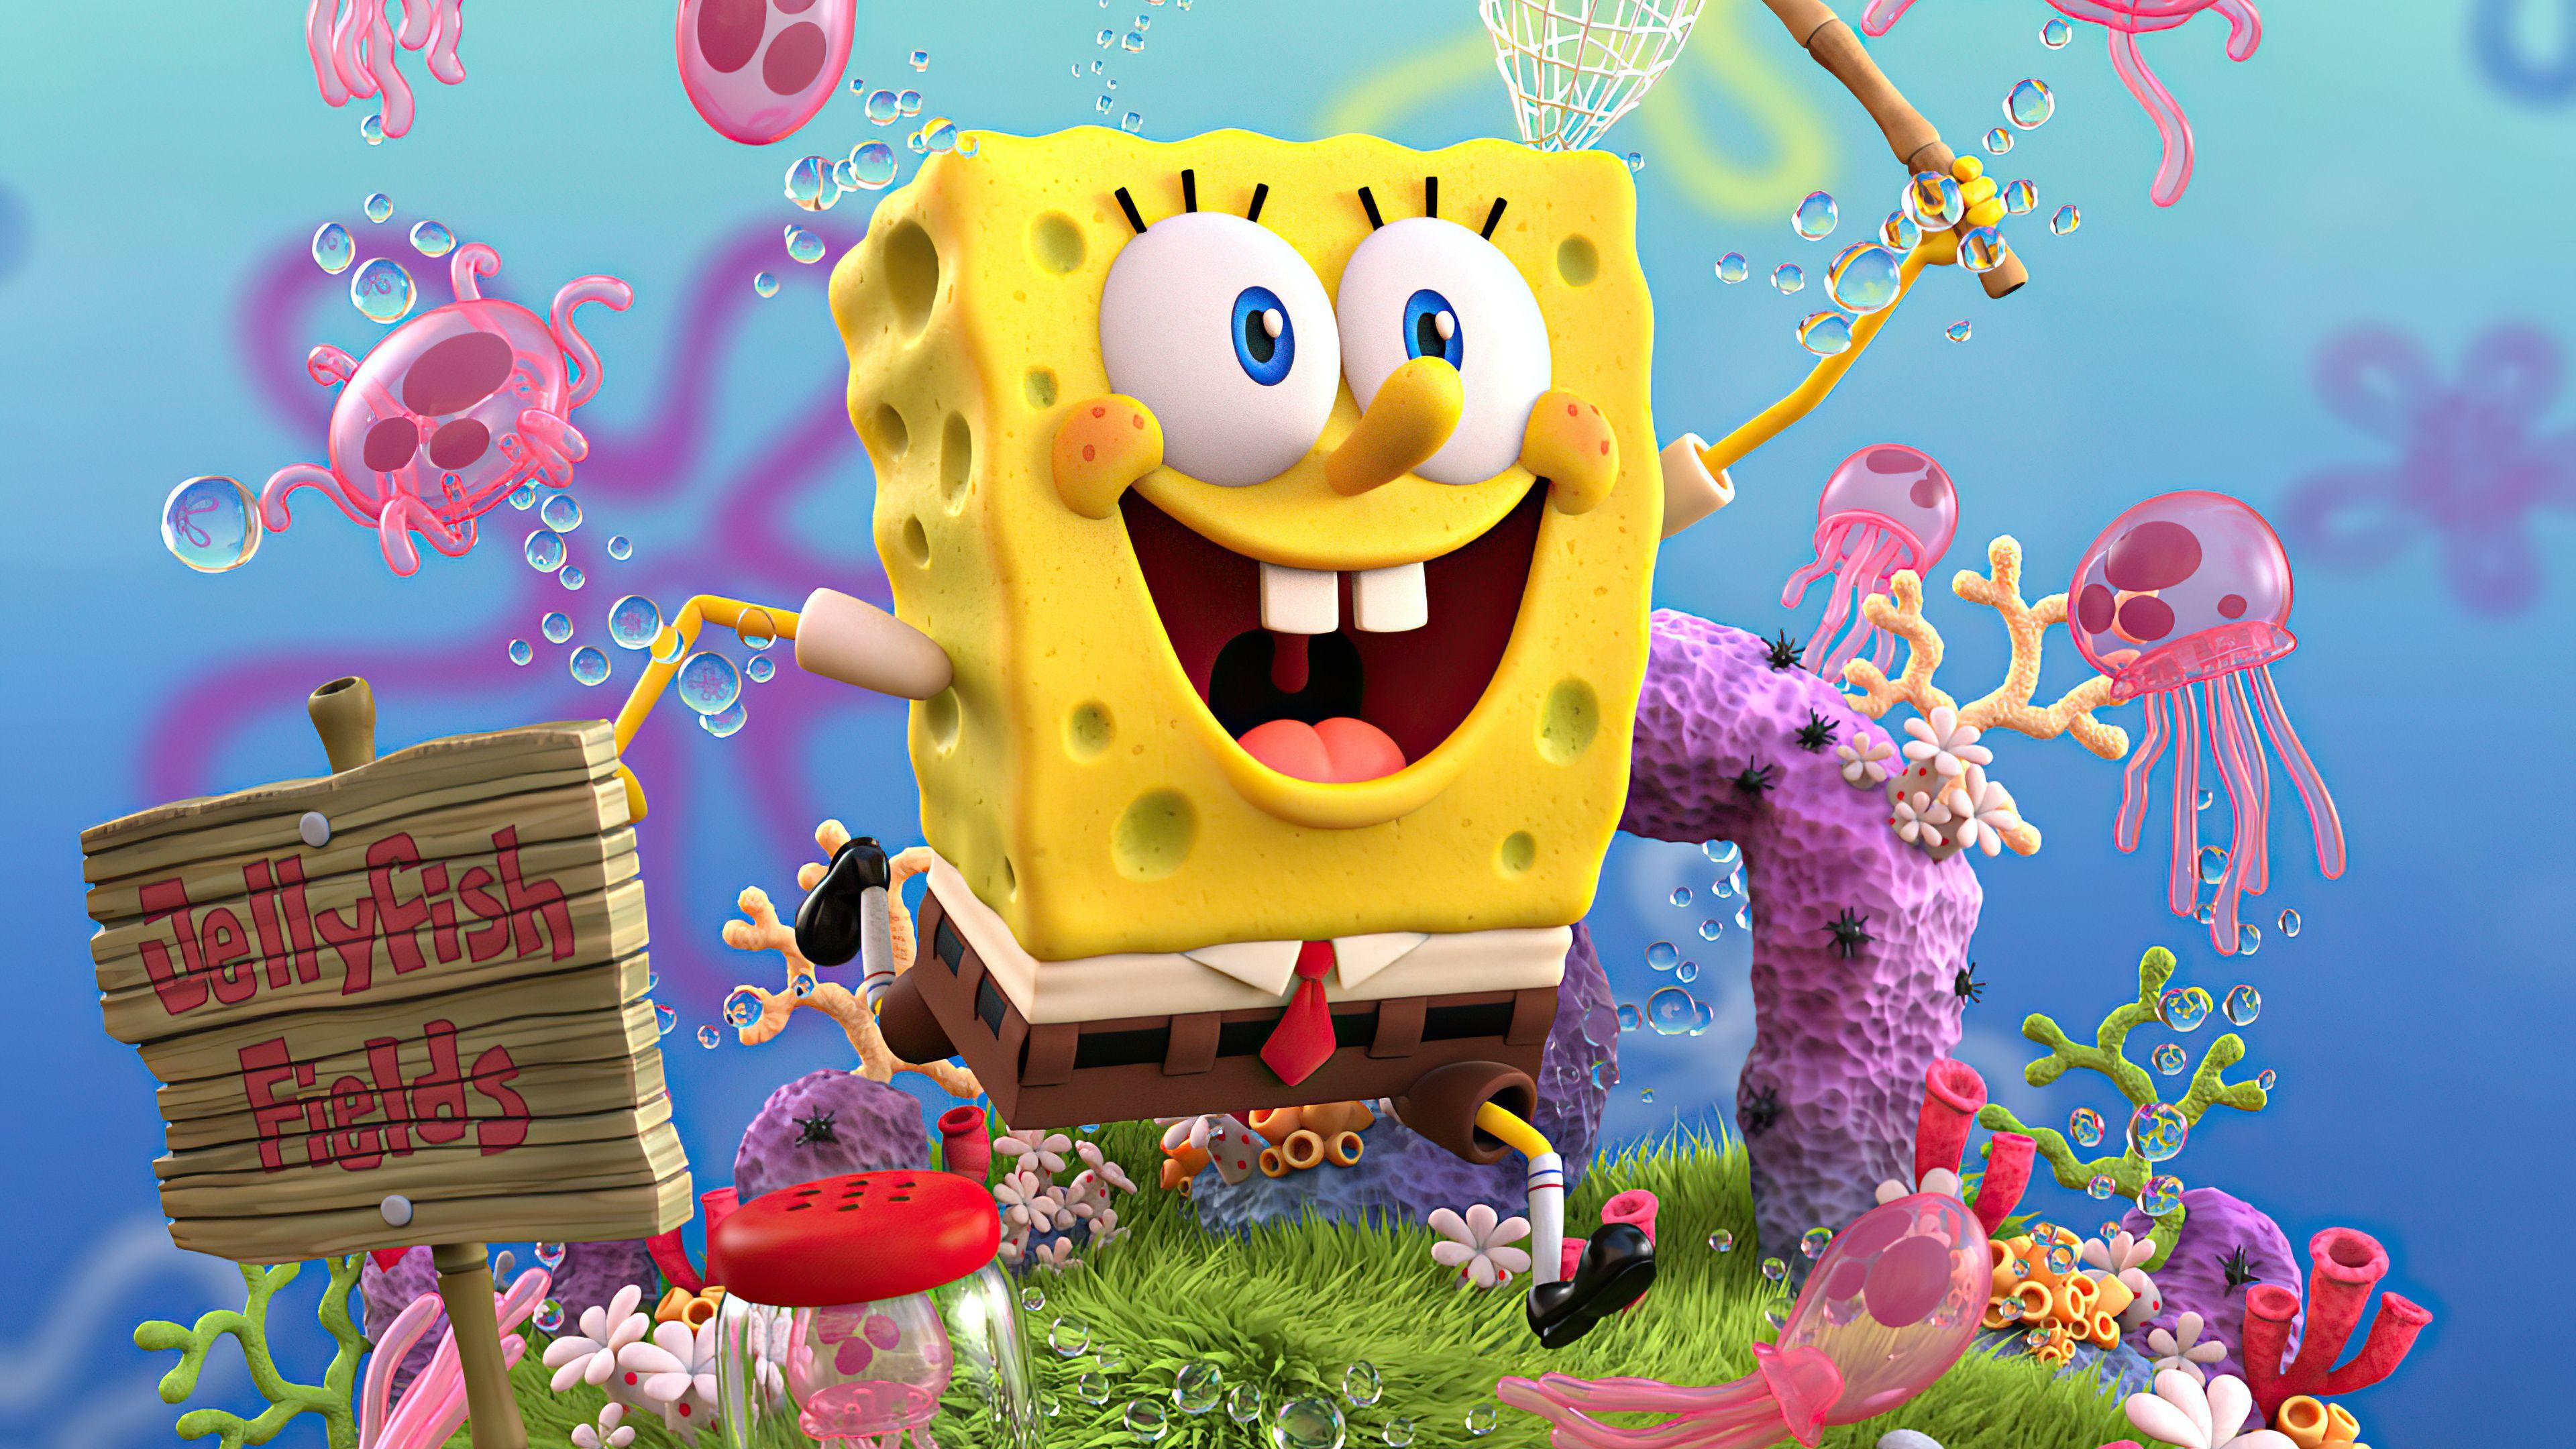 75 Wallpaper Desktop Hd Spongebob free Download - MyWeb